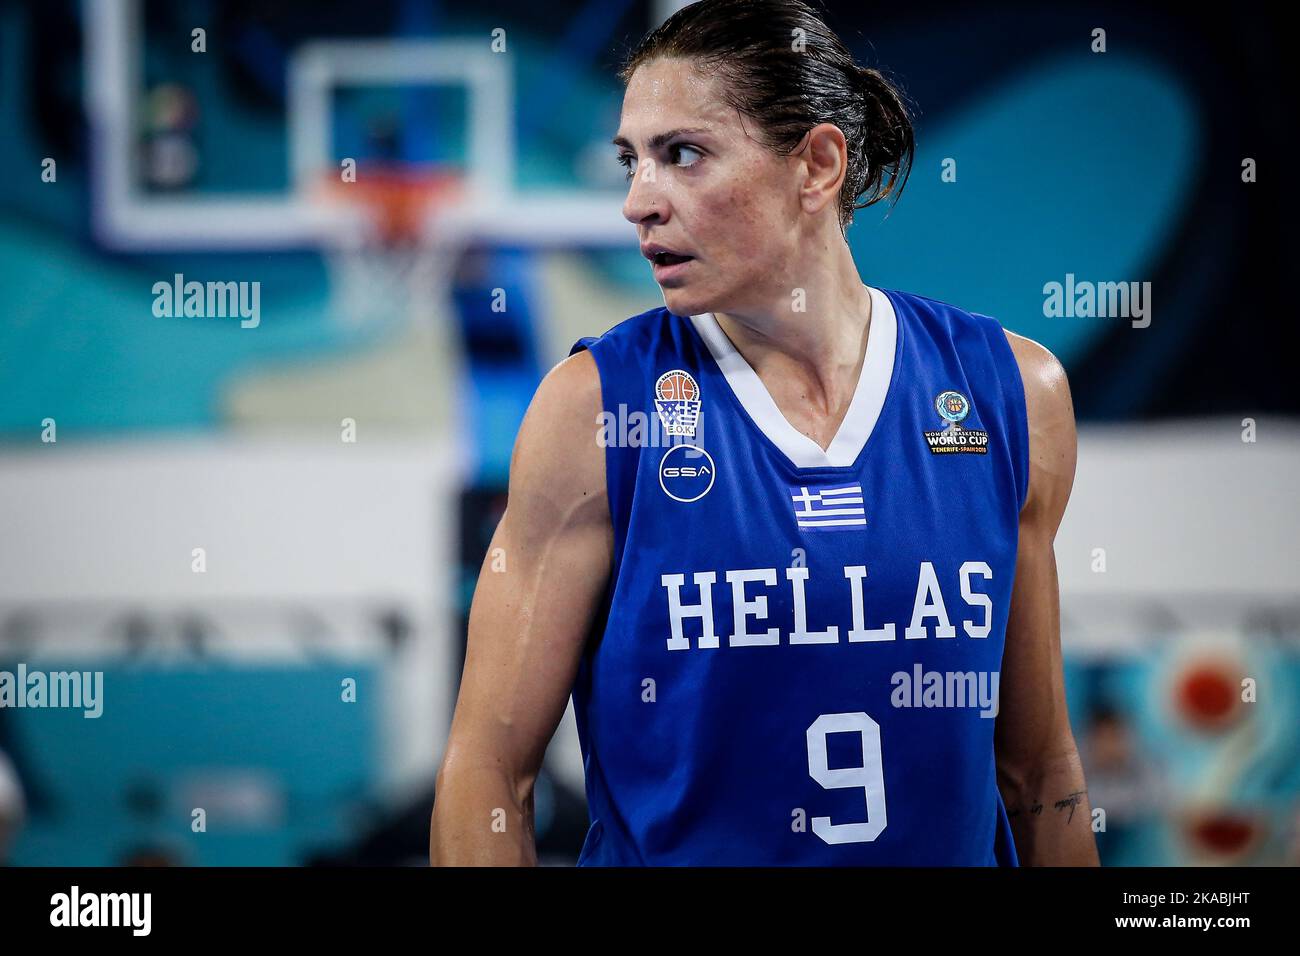 Spain, Tenerife, September 25, 2018: Greek female basketball player Evanthia Maltsi during the FIBA Women's Basketball World Cup Stock Photo